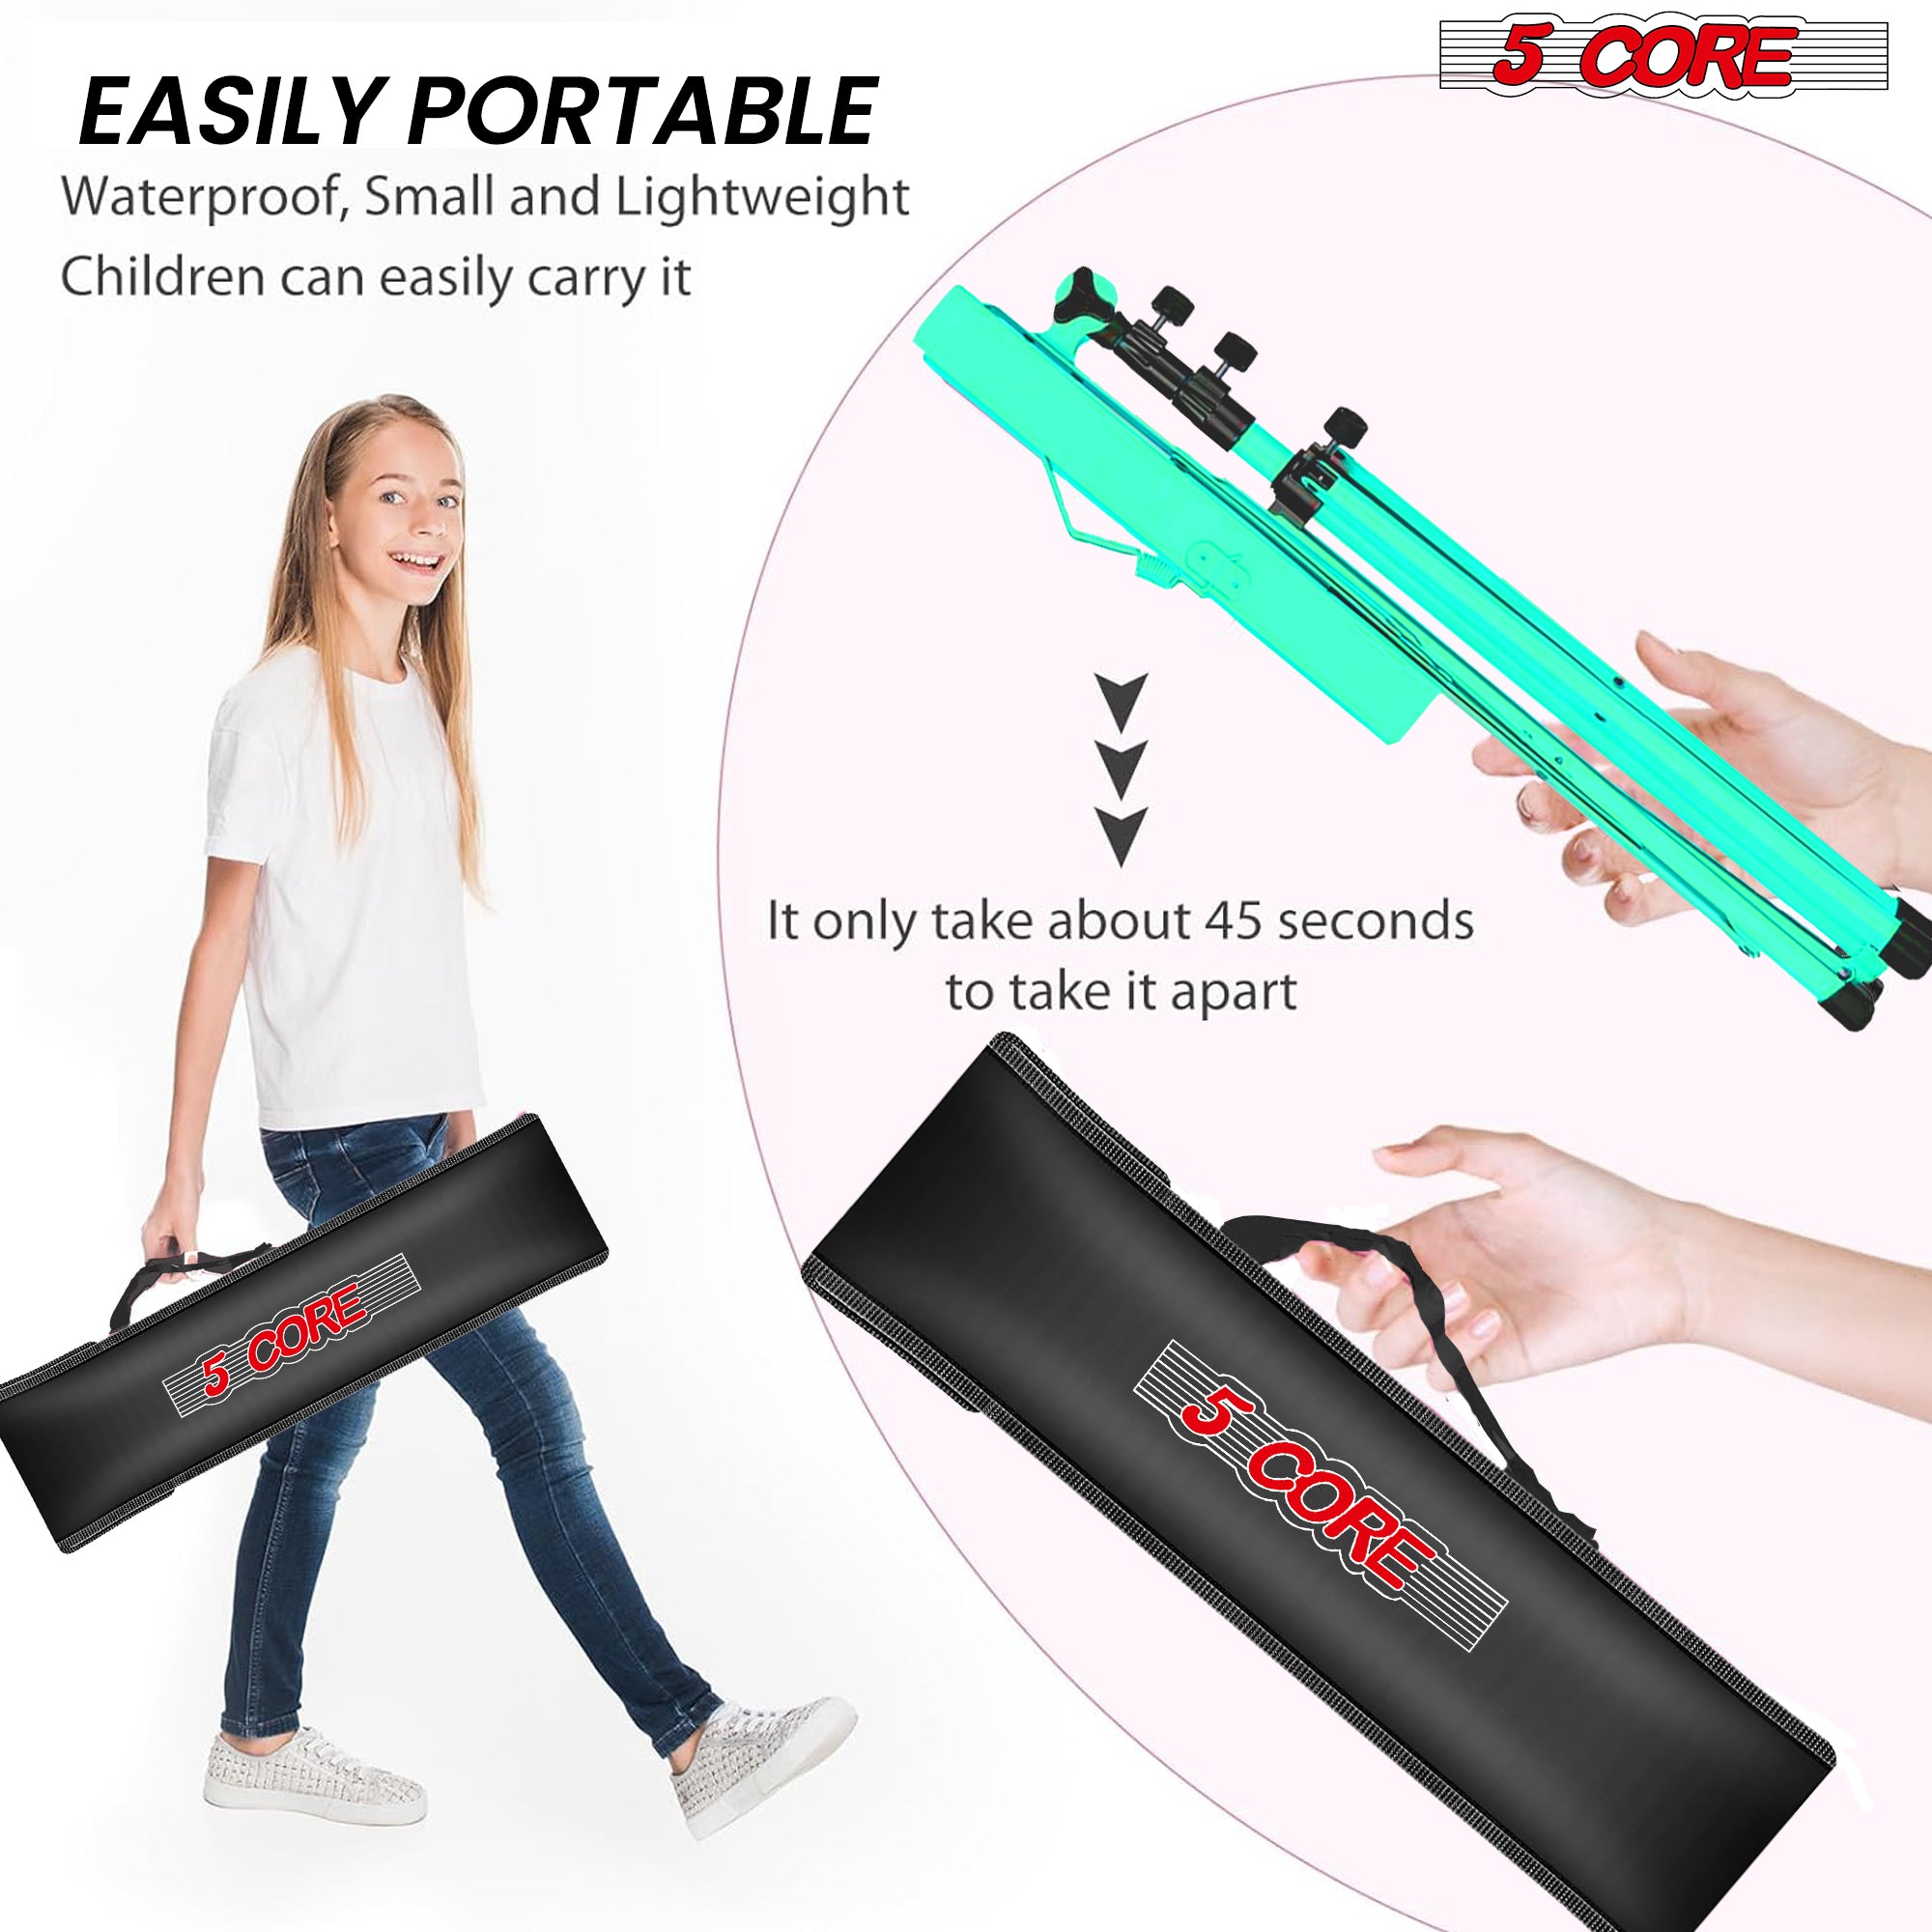 easily portable